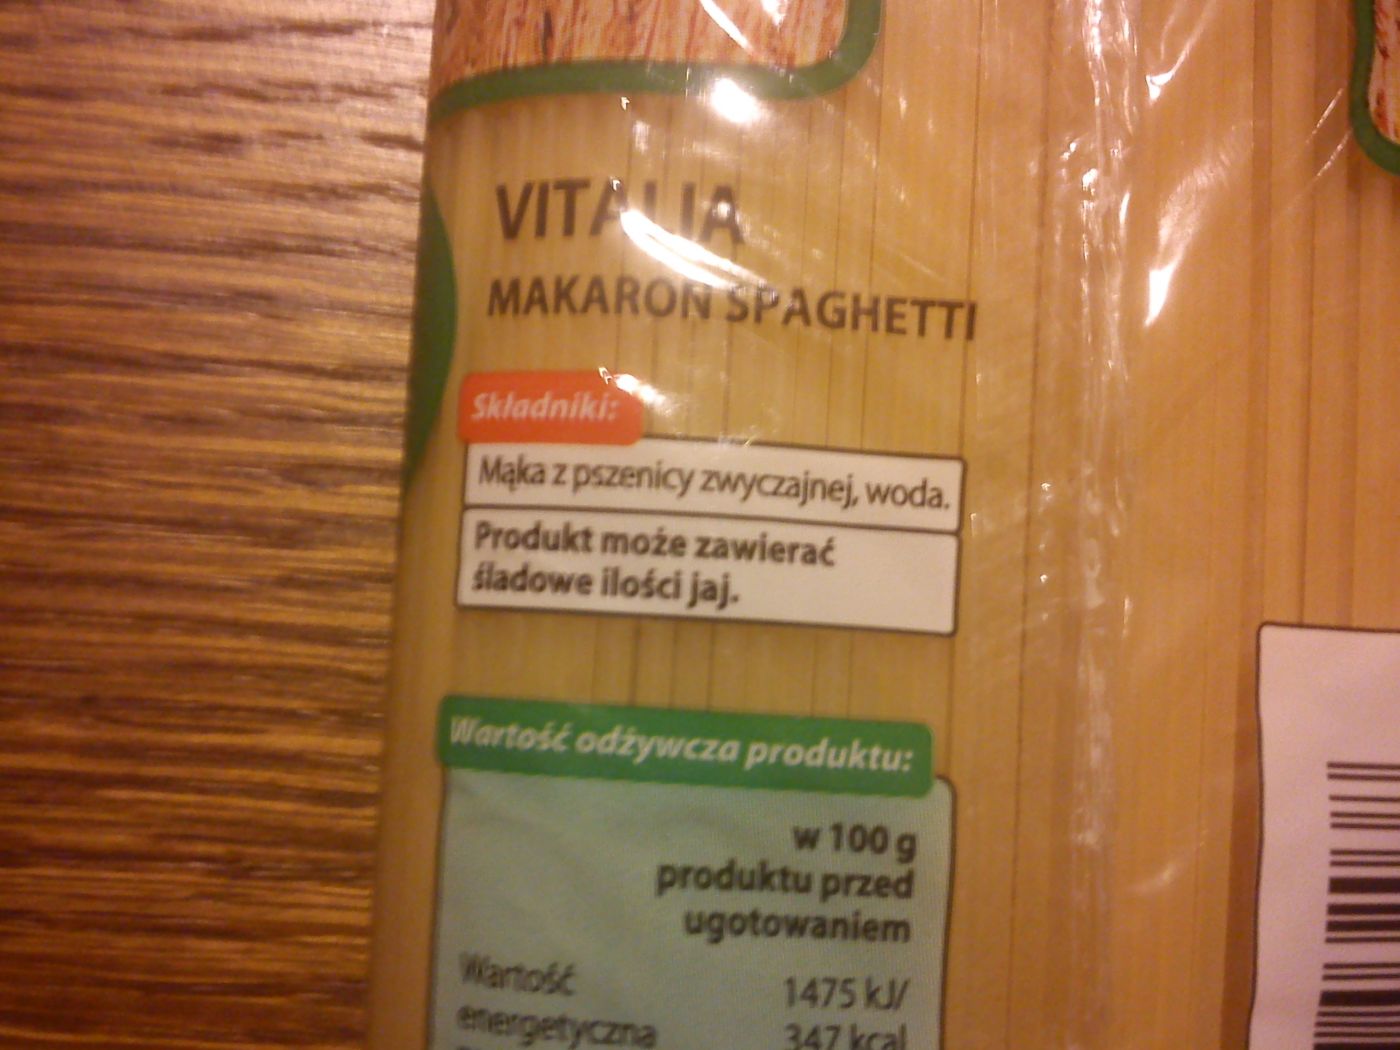 Makaron spaghetti Vitalia 